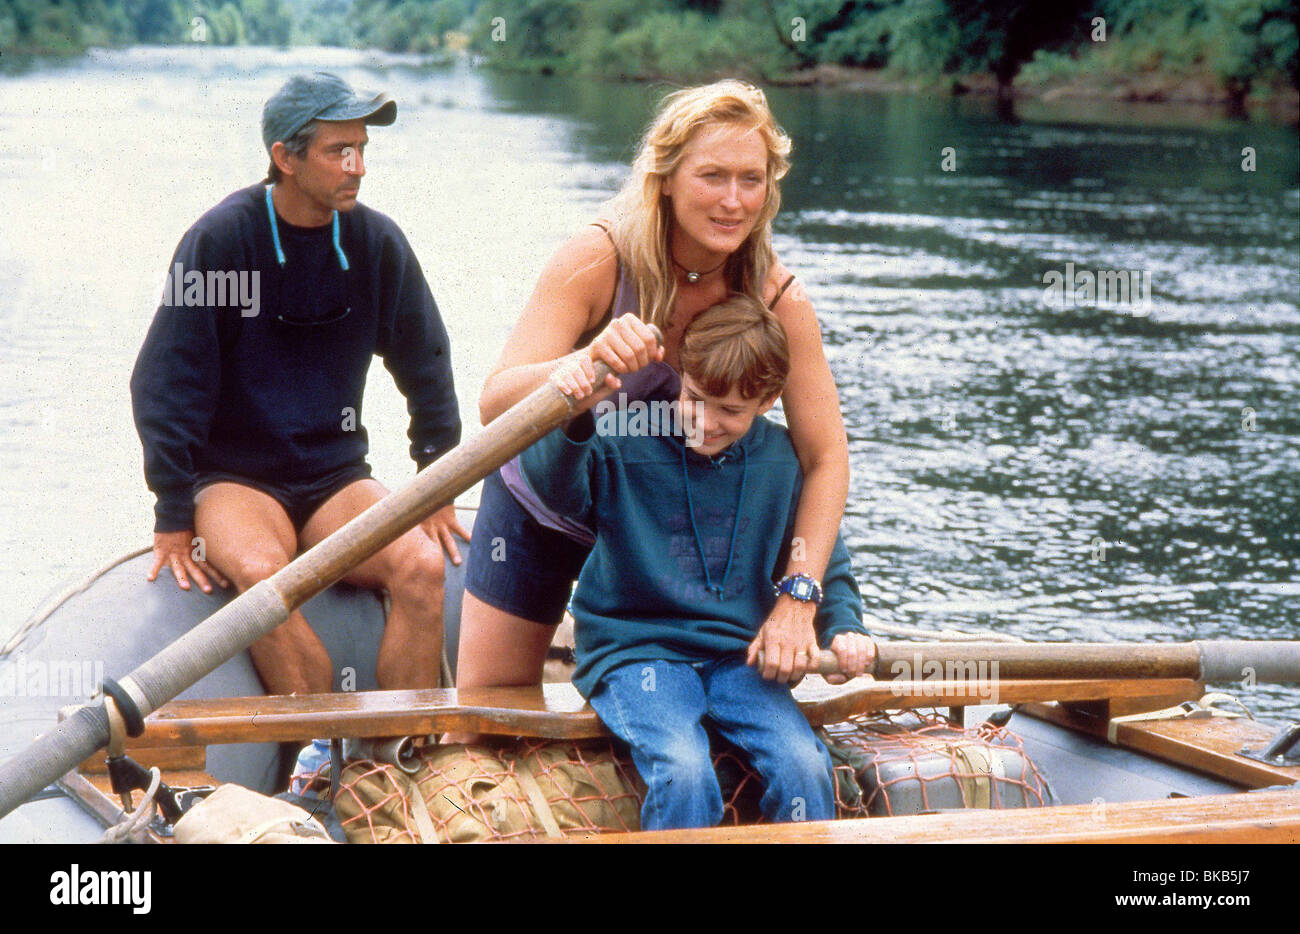 la-riviere-sauvage-1994-david-strathairn-meryl-streep-joseph-mazzello-096-trvw-bkb5j7.jpg